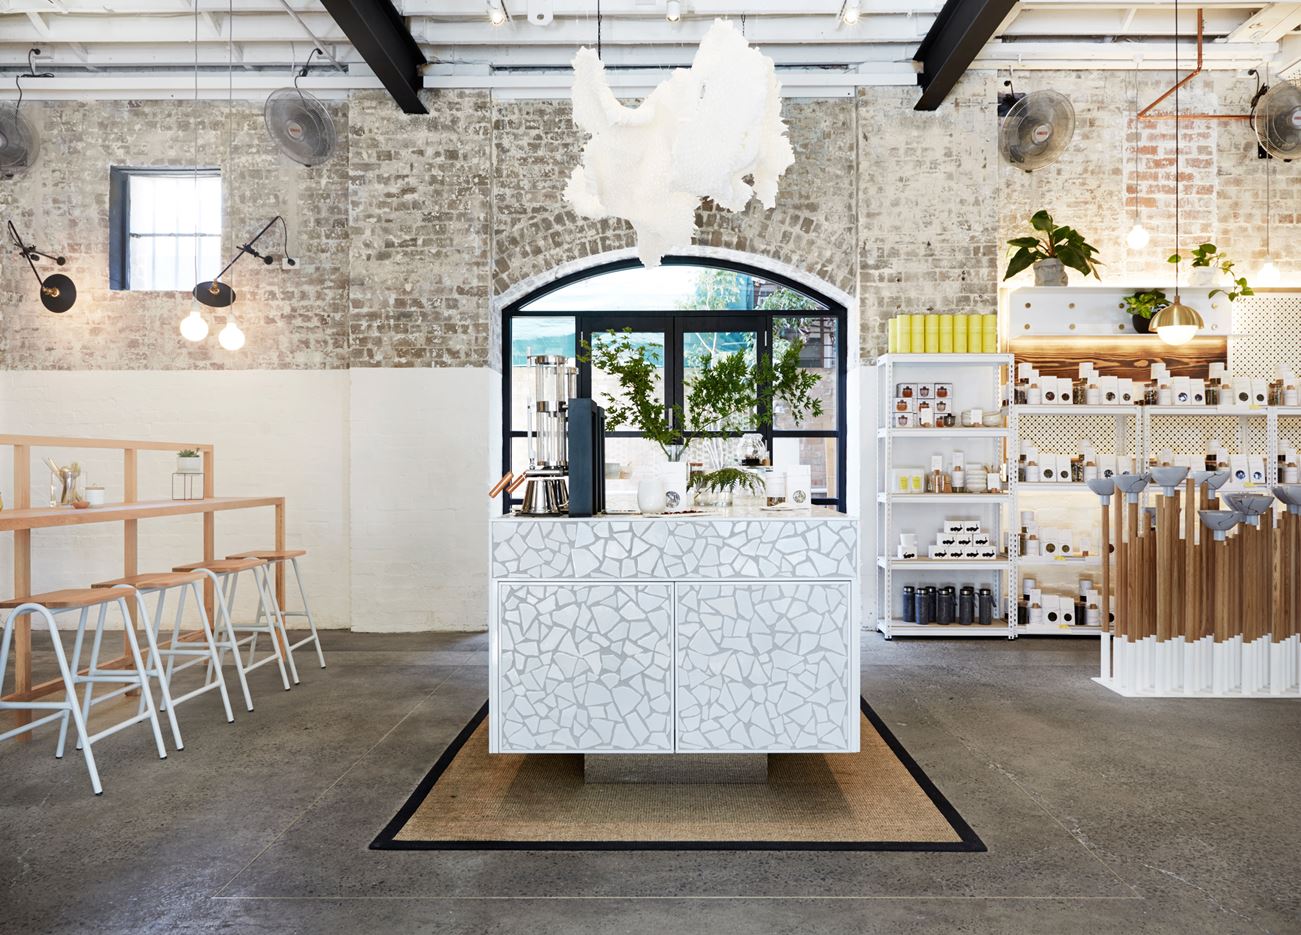 The Rabbit Hole Oraganic Tea Bar in Redfern, Australia by Matt Woods Design